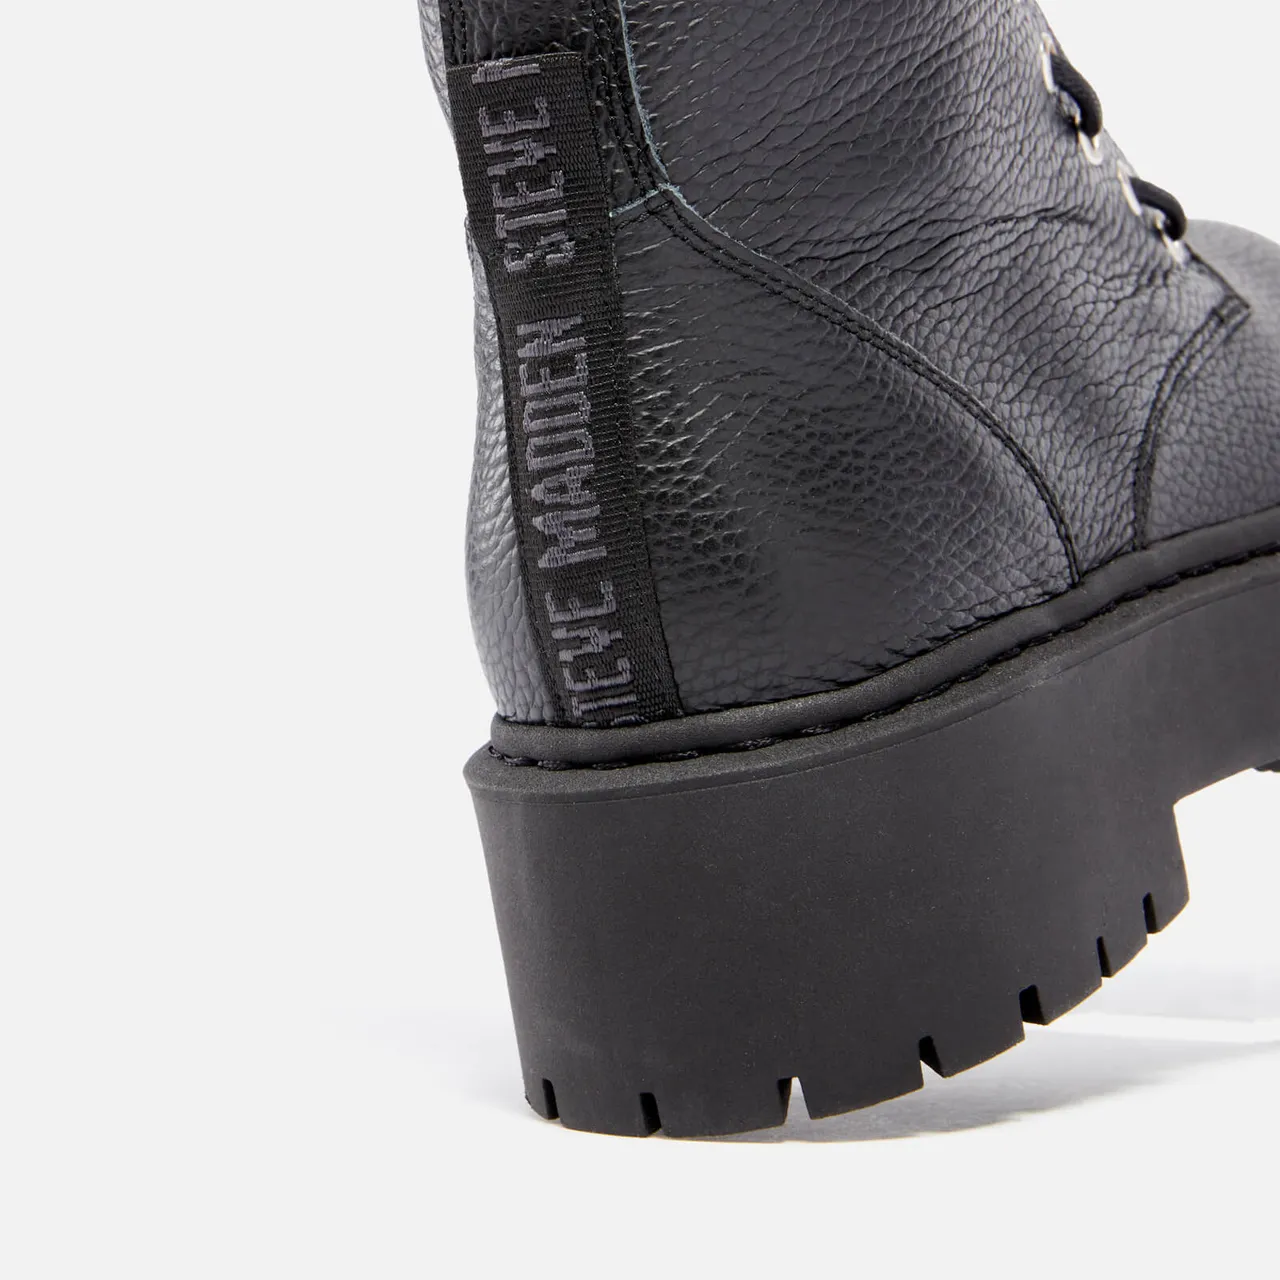 Steve Madden Women's Odilia Leather Zipped Boots - UK